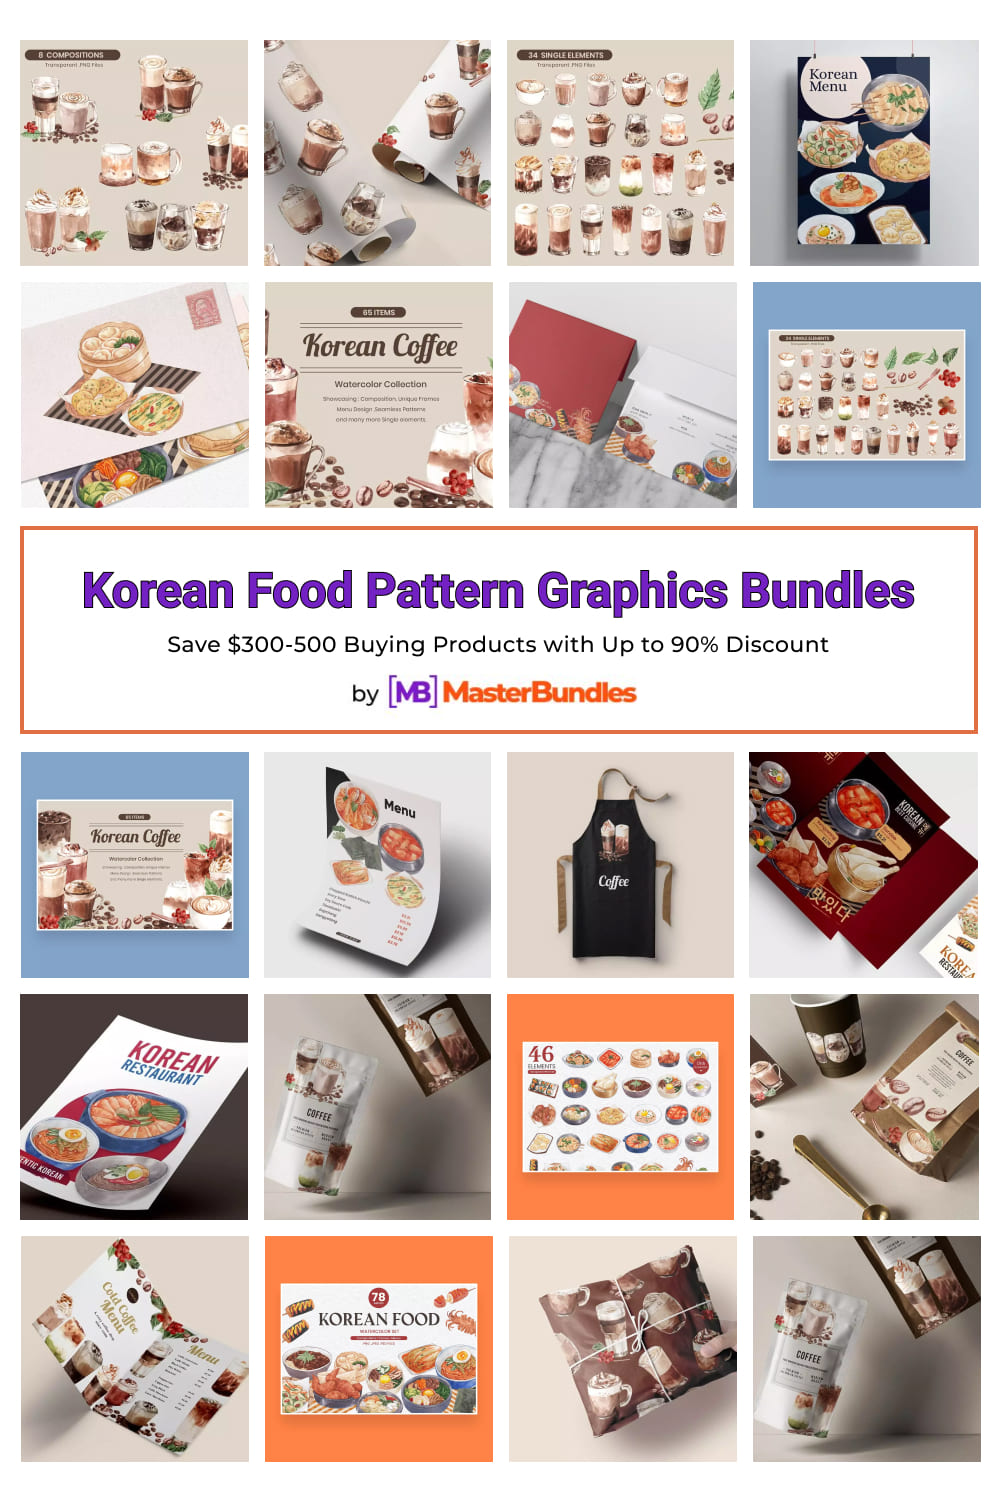 Korean Food Pattern Graphics Bundles Pinterest image.